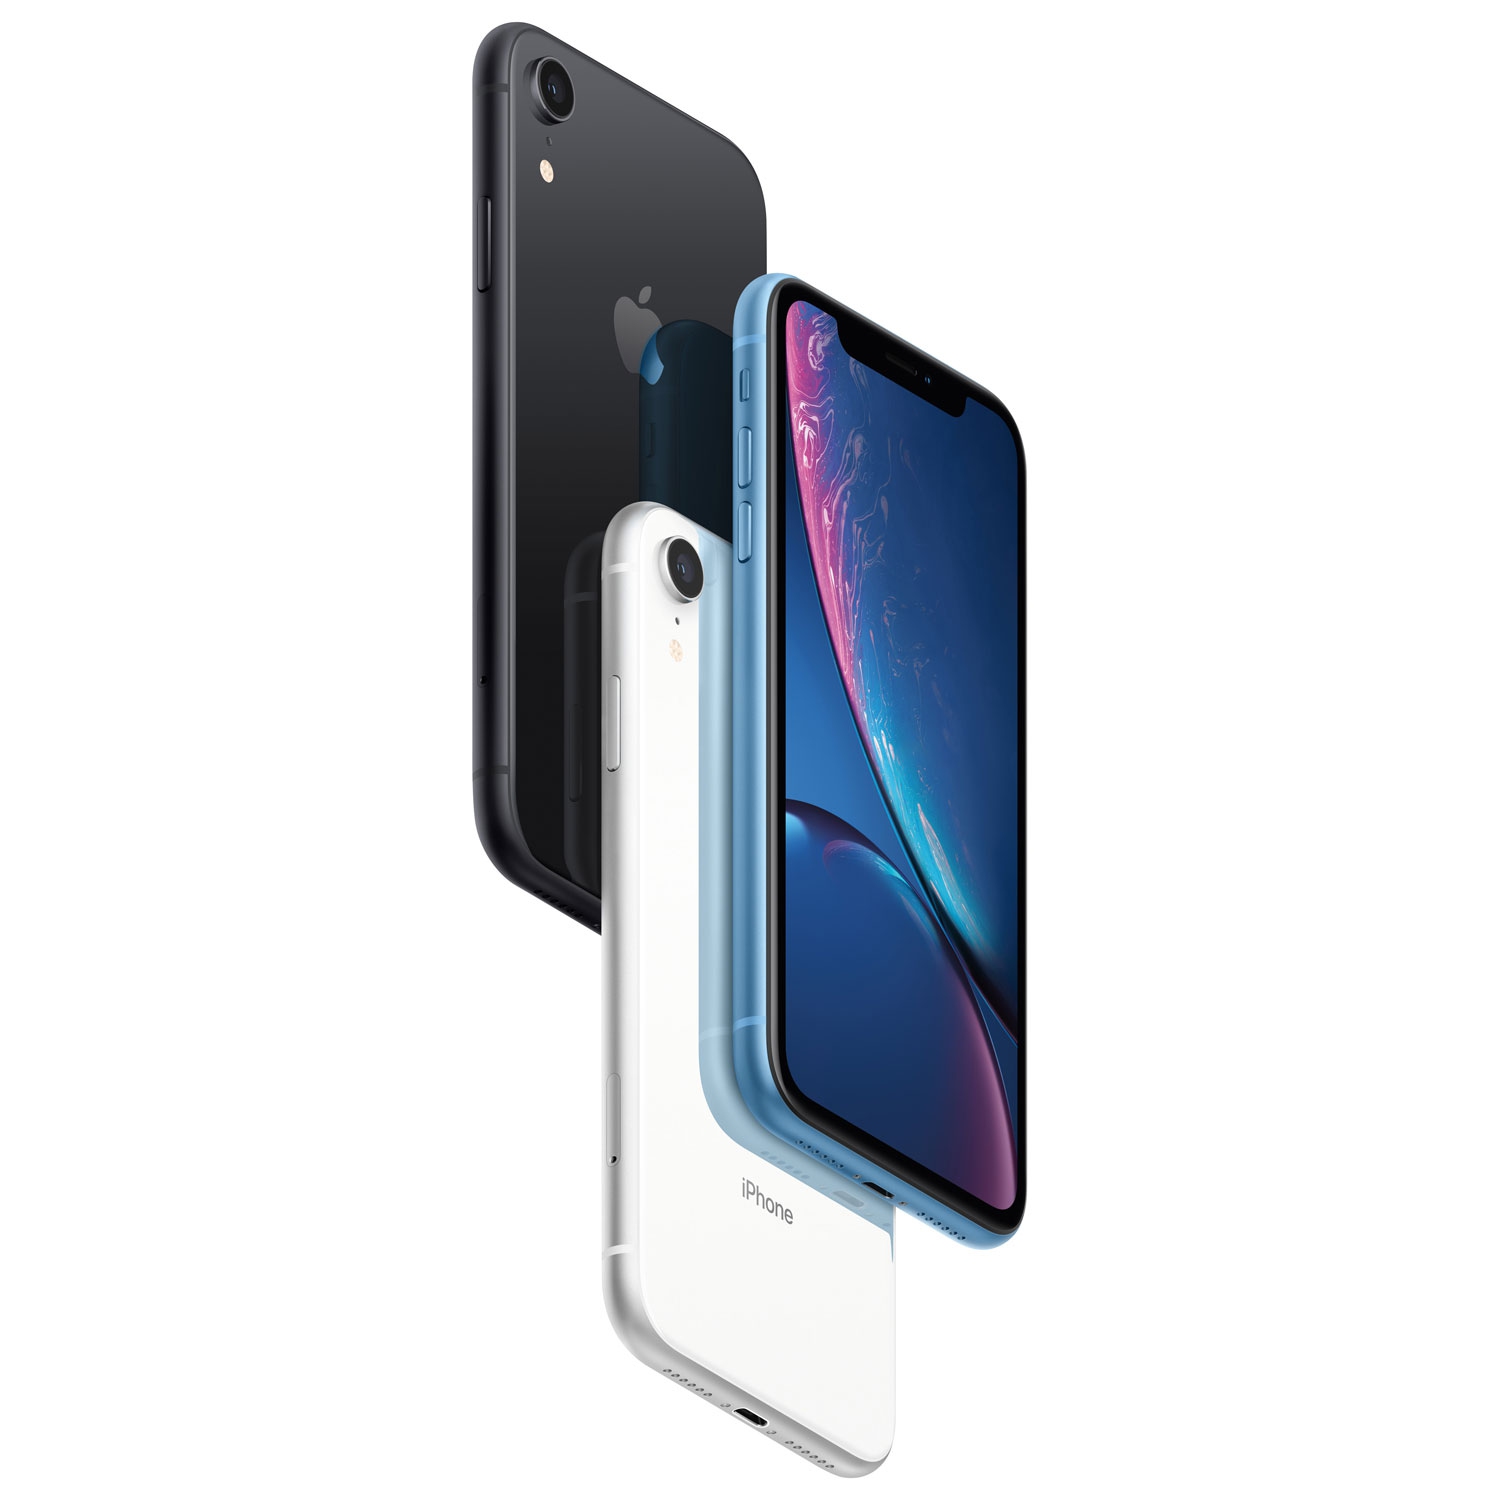 Apple iPhone XR 64GB Smartphone - White - Unlocked - Open Box